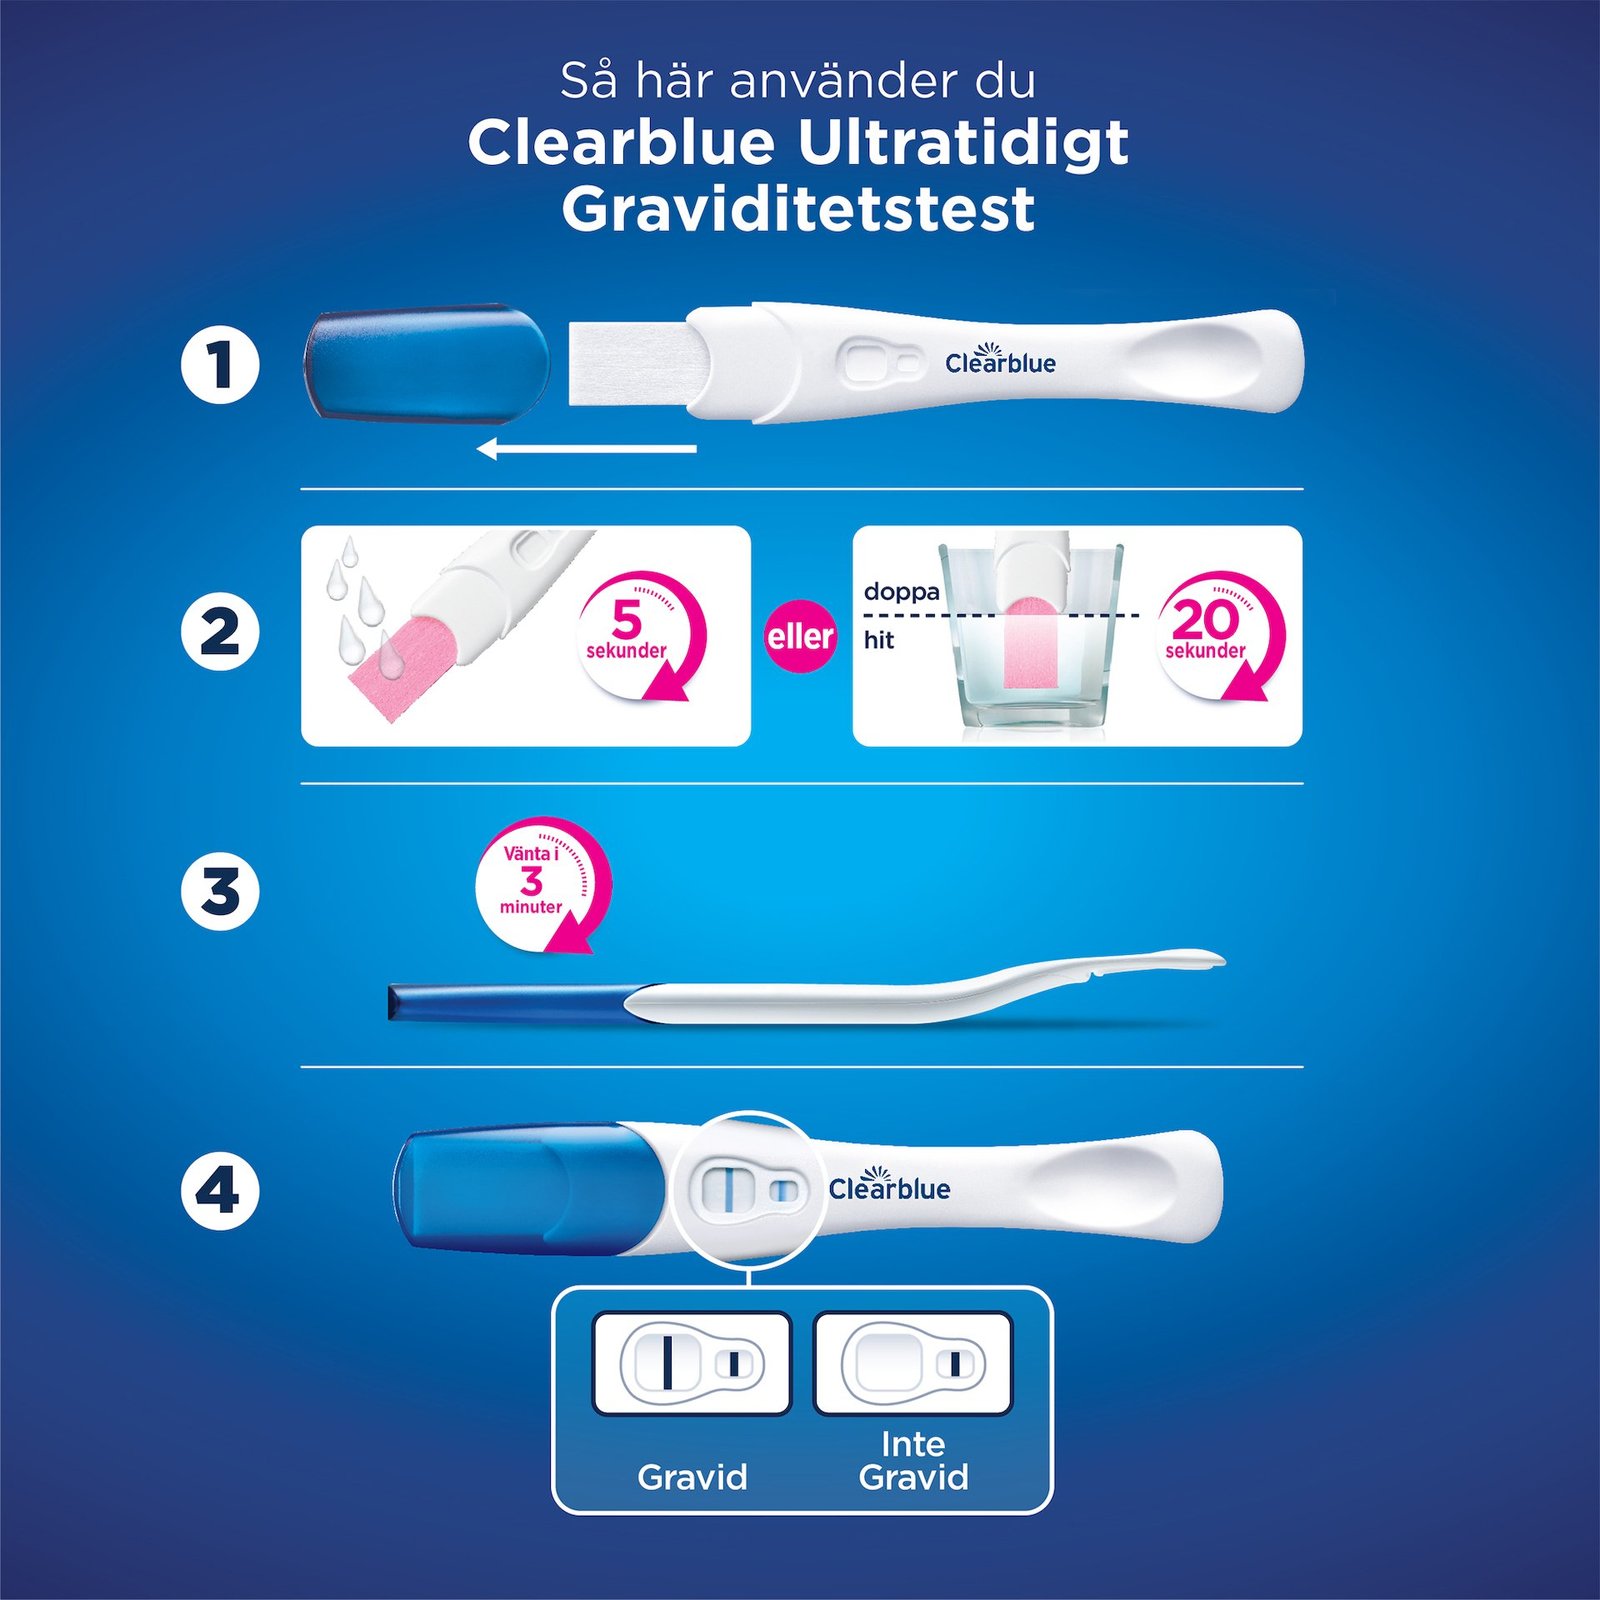 Clearblue Ultratidigt Graviditetstest - resultat sex dagar tidigare 3 st